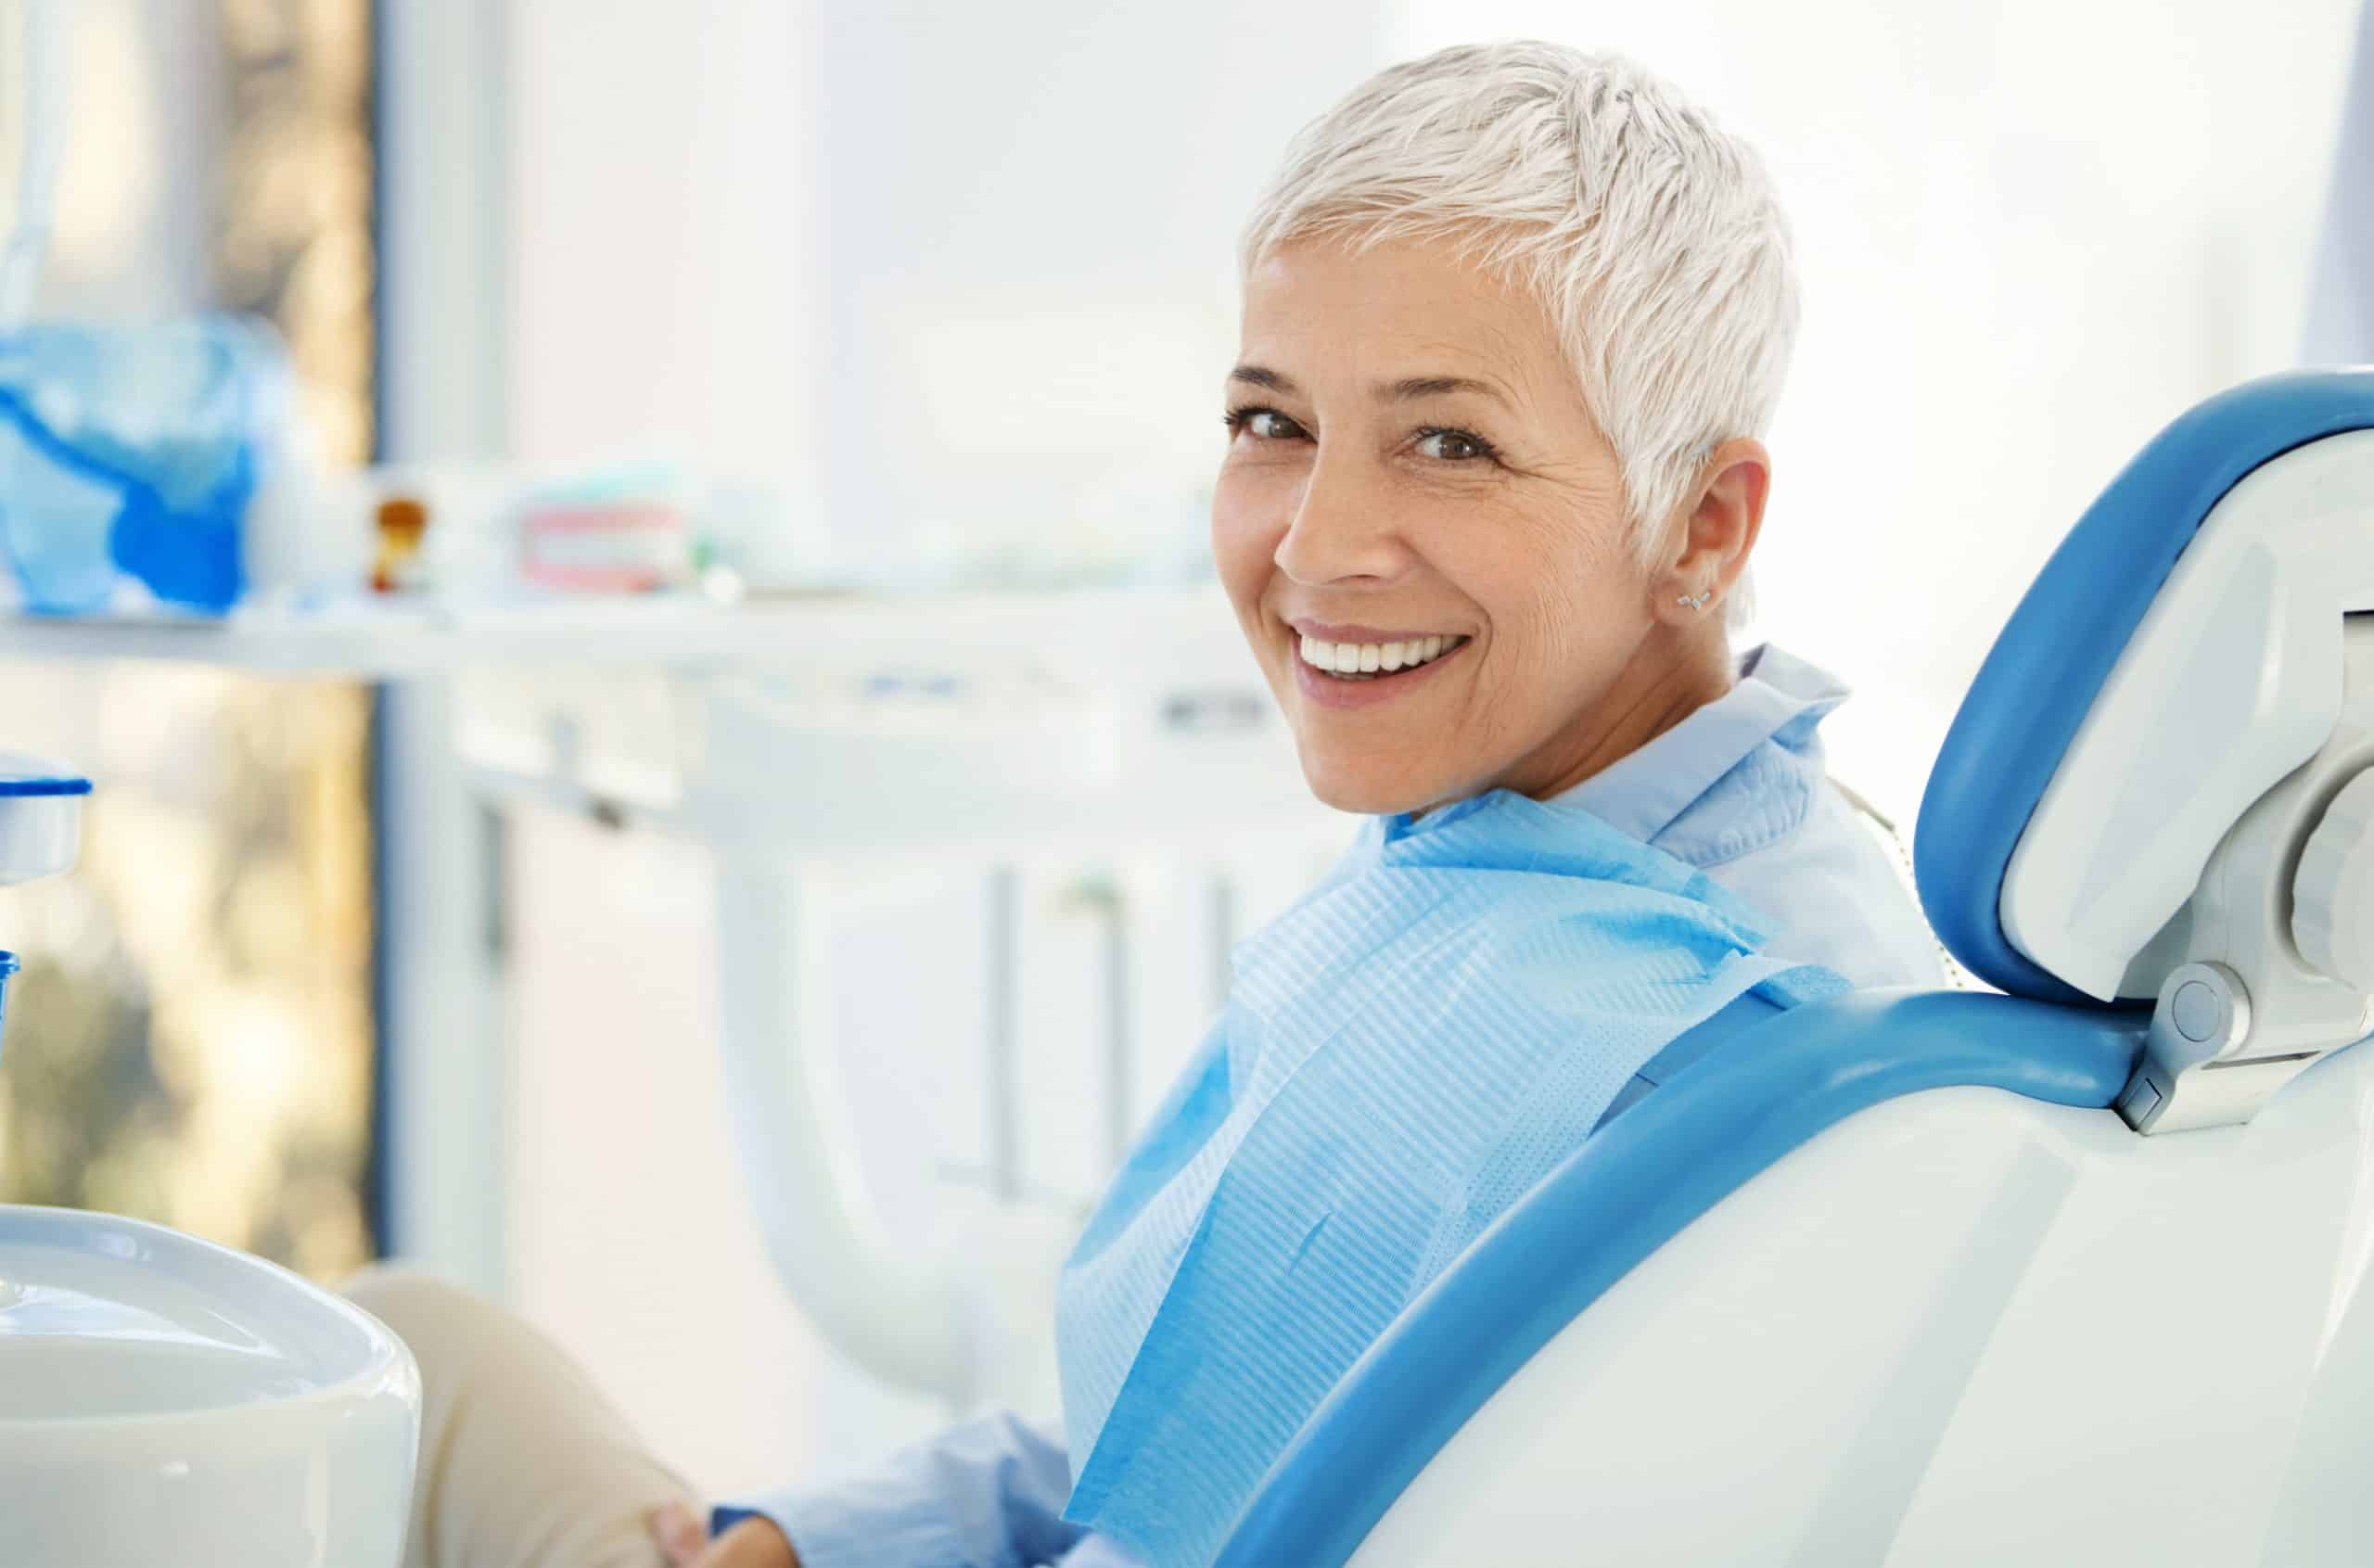 woman in dental chair getting dental restoration treatment.